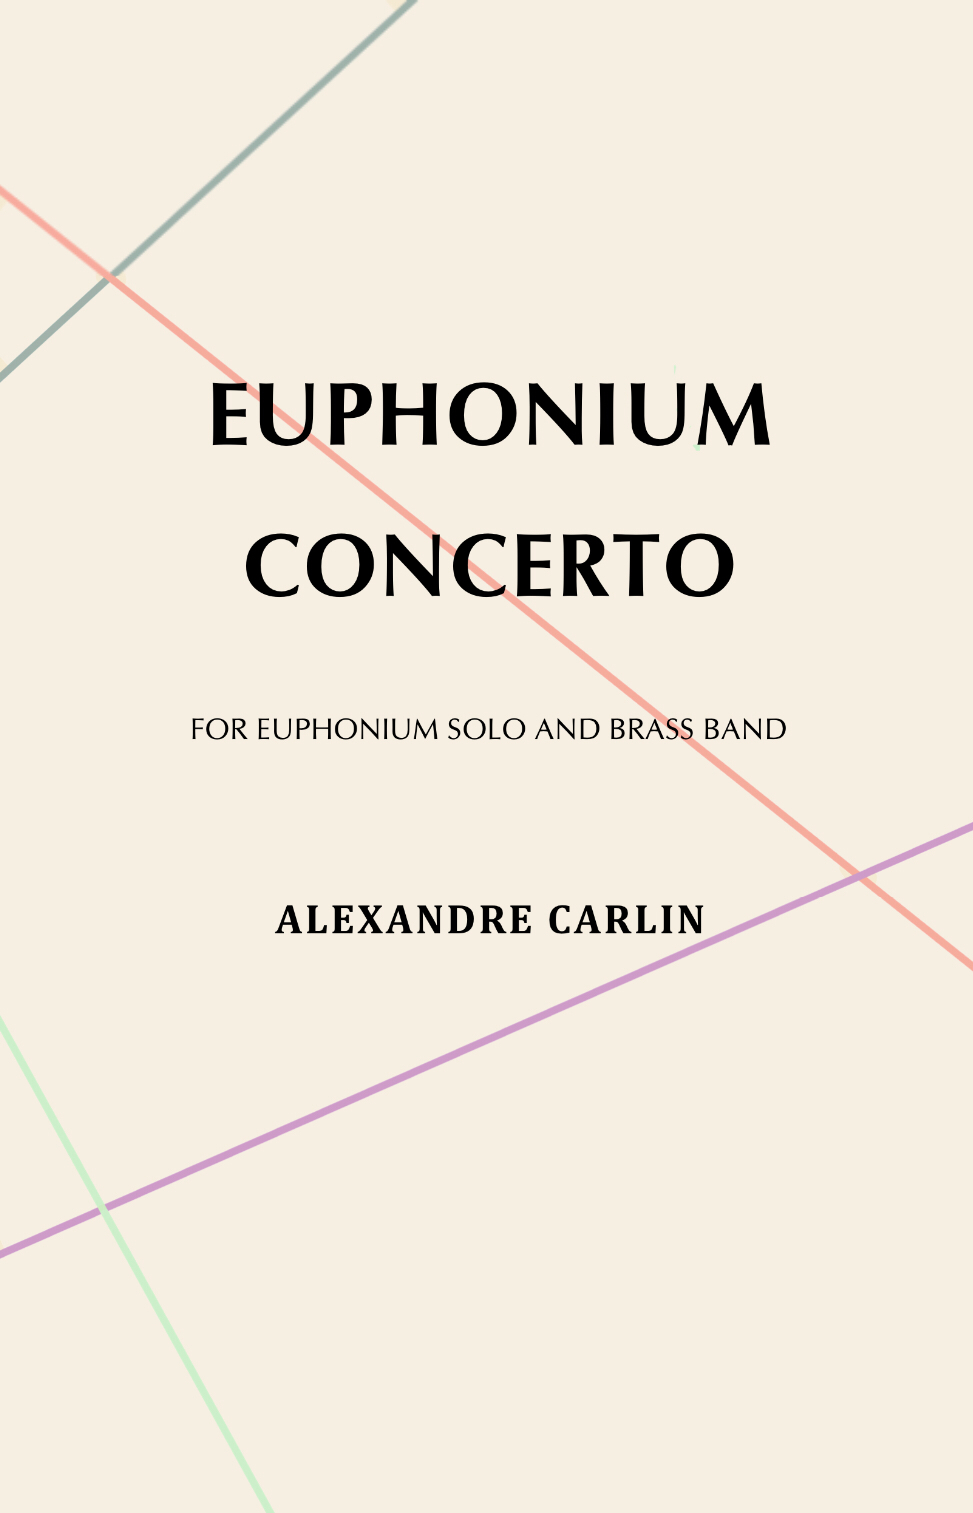 Euphonium Concerto: Brass Band Version by Alexandre Carlin